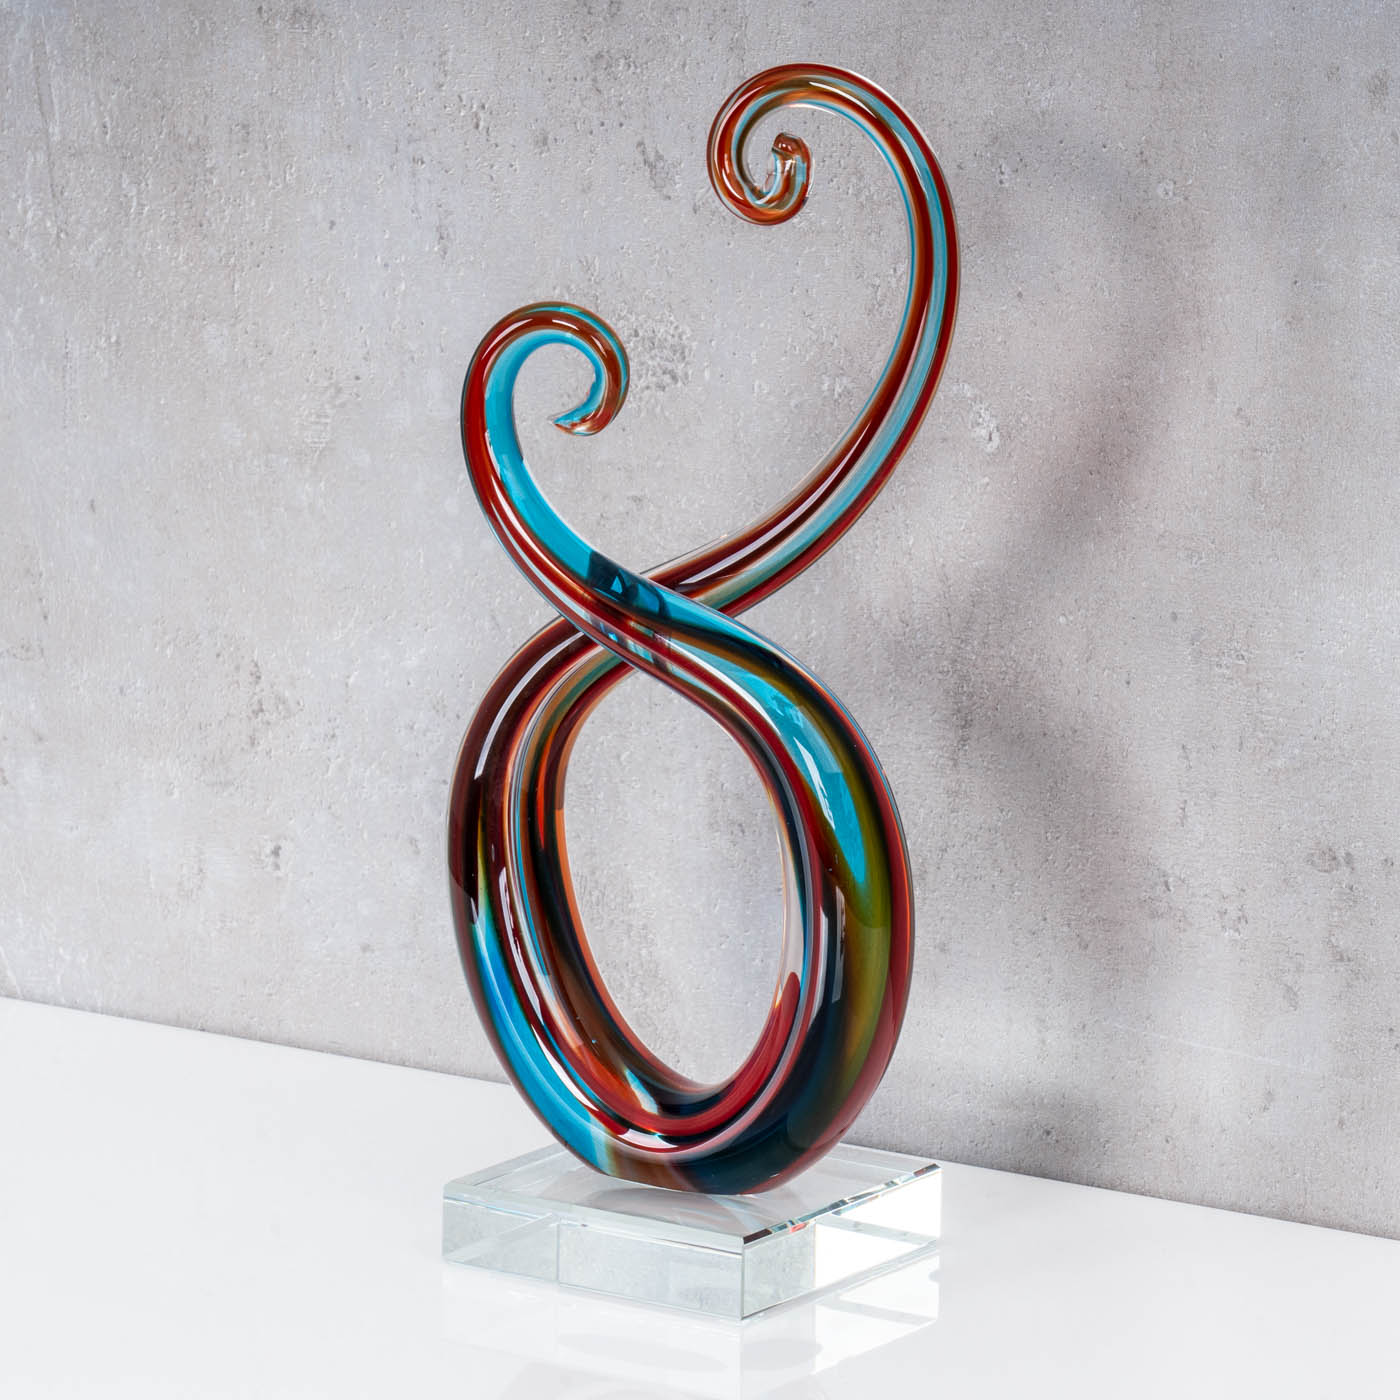 Skulptur H28cm Glas Glasdeko Blau Rot Deko Design Figur Unikat Tischdeko Geschenk